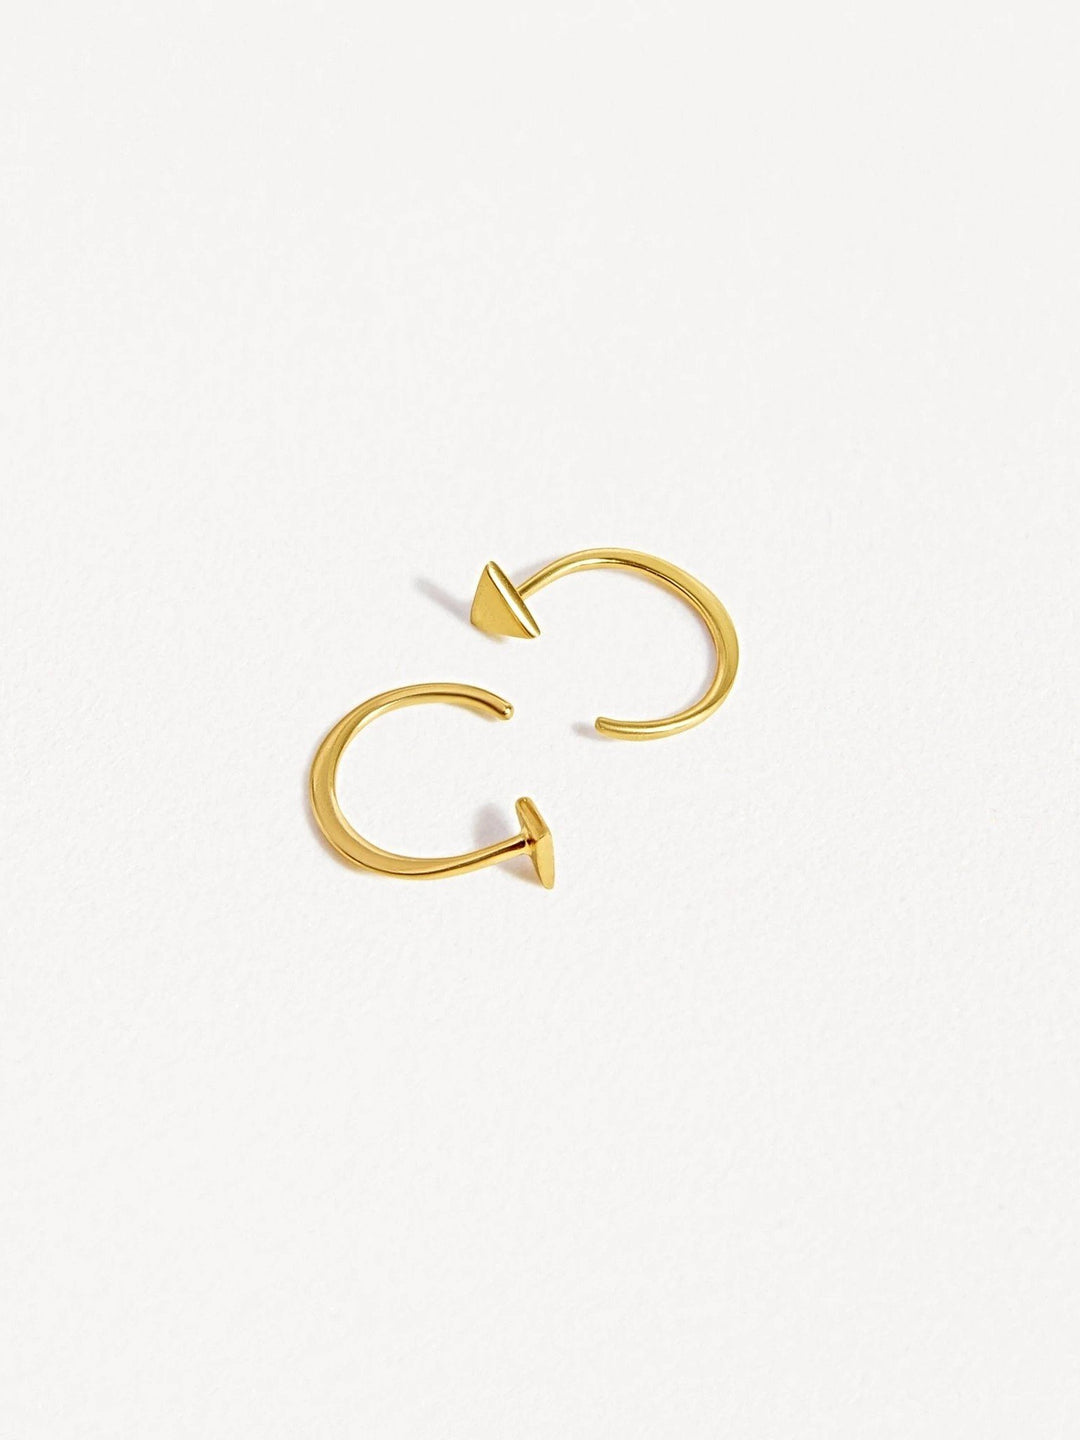 Vittoria Huggie Earrings - 24K Gold PlatedBackUpItemsBlack Friday JewelryLunai Jewelry